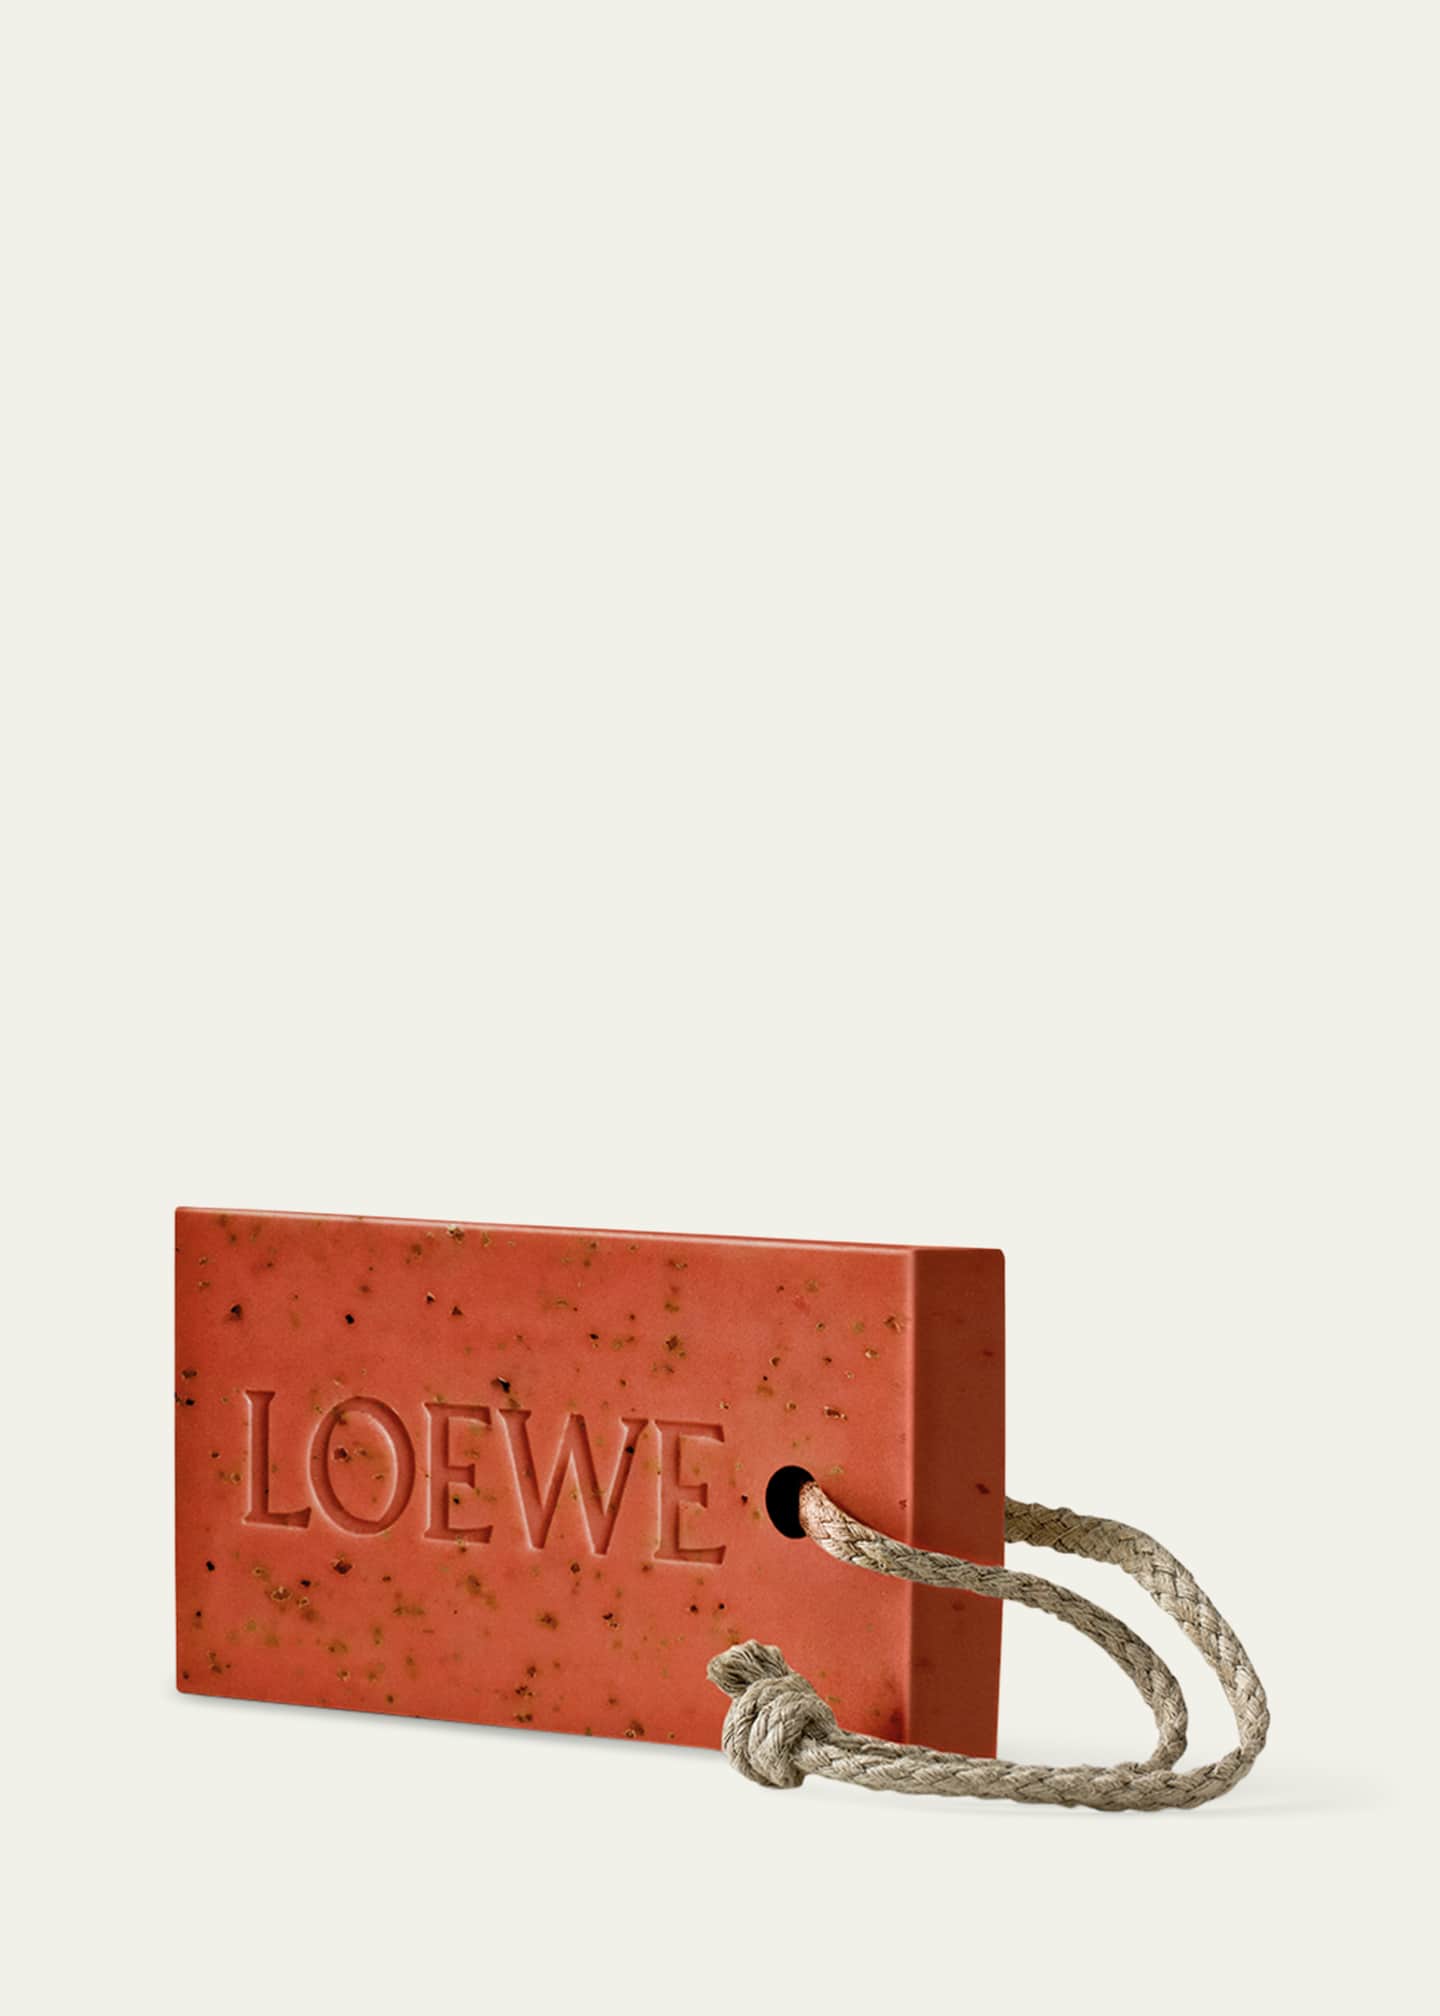 Loewe Tomato Leaves Solid Soap, 290 g - Bergdorf Goodman